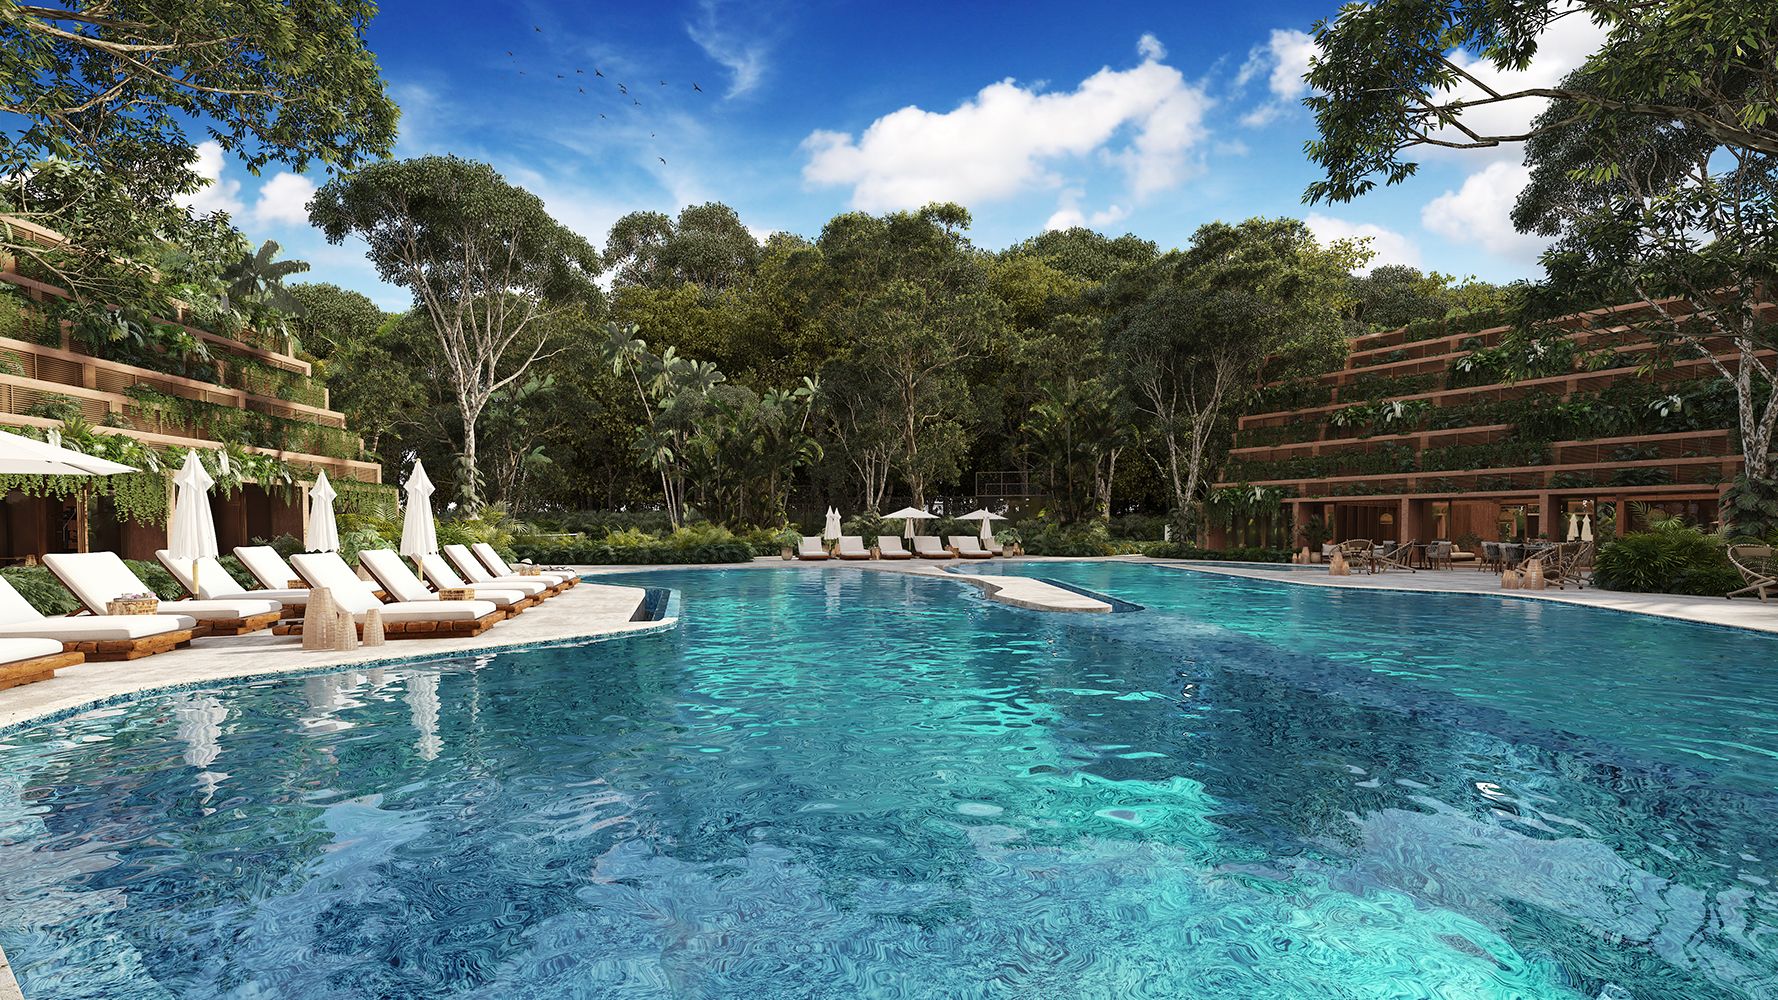 Outdoor lifestyle, 2 terraces, private pool, luxury finishes, private bedroom, pre-construction for sale Aldea Zama, Tulum.